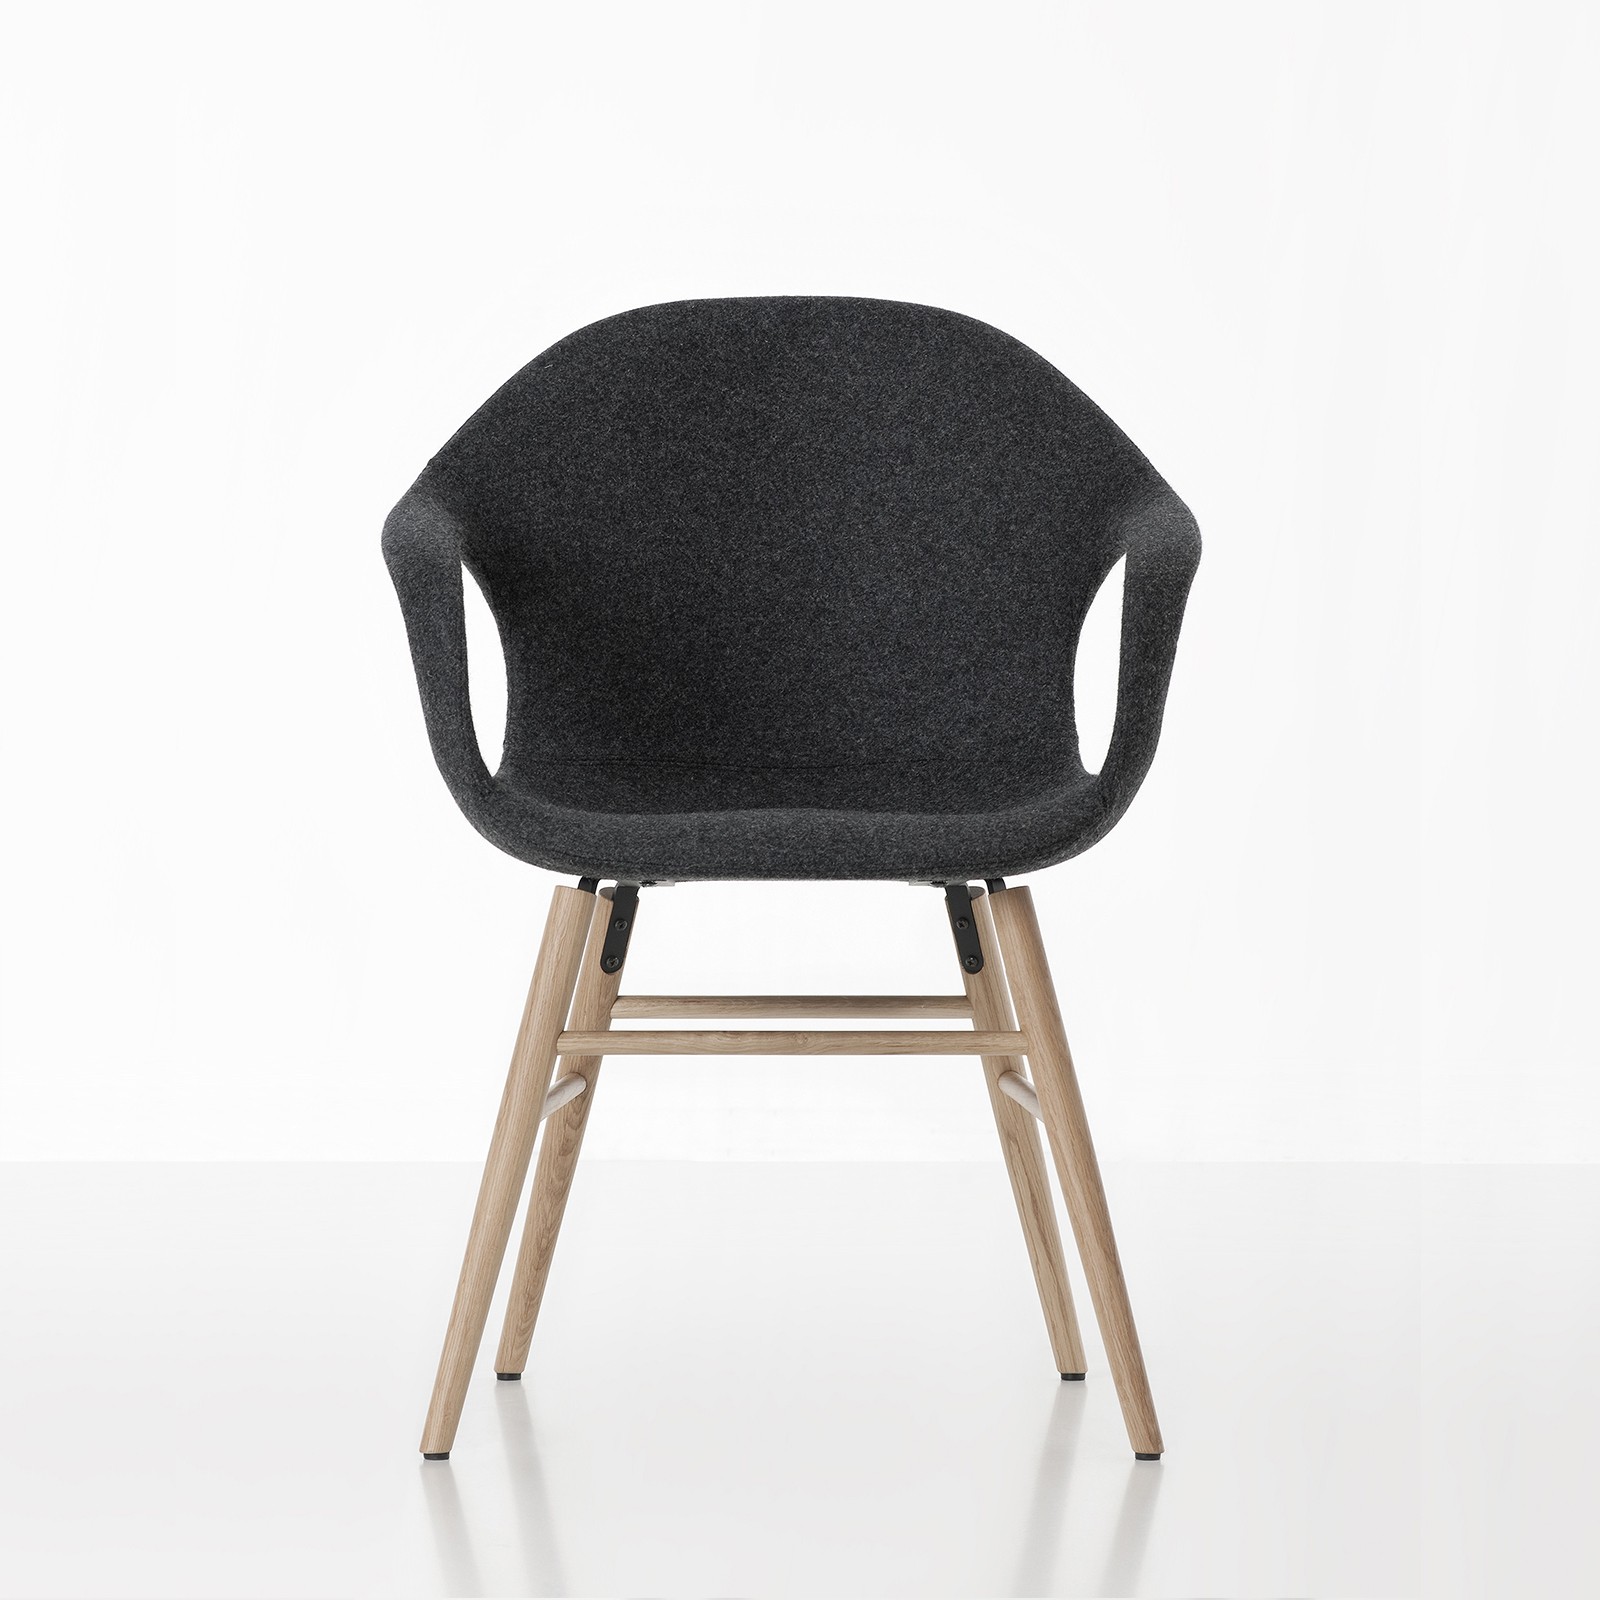 Möbel - Stühle - Elephant Wood Sessel - Kristalia - scwarz - Buchenfurnier, lackiertes Polyurhethan